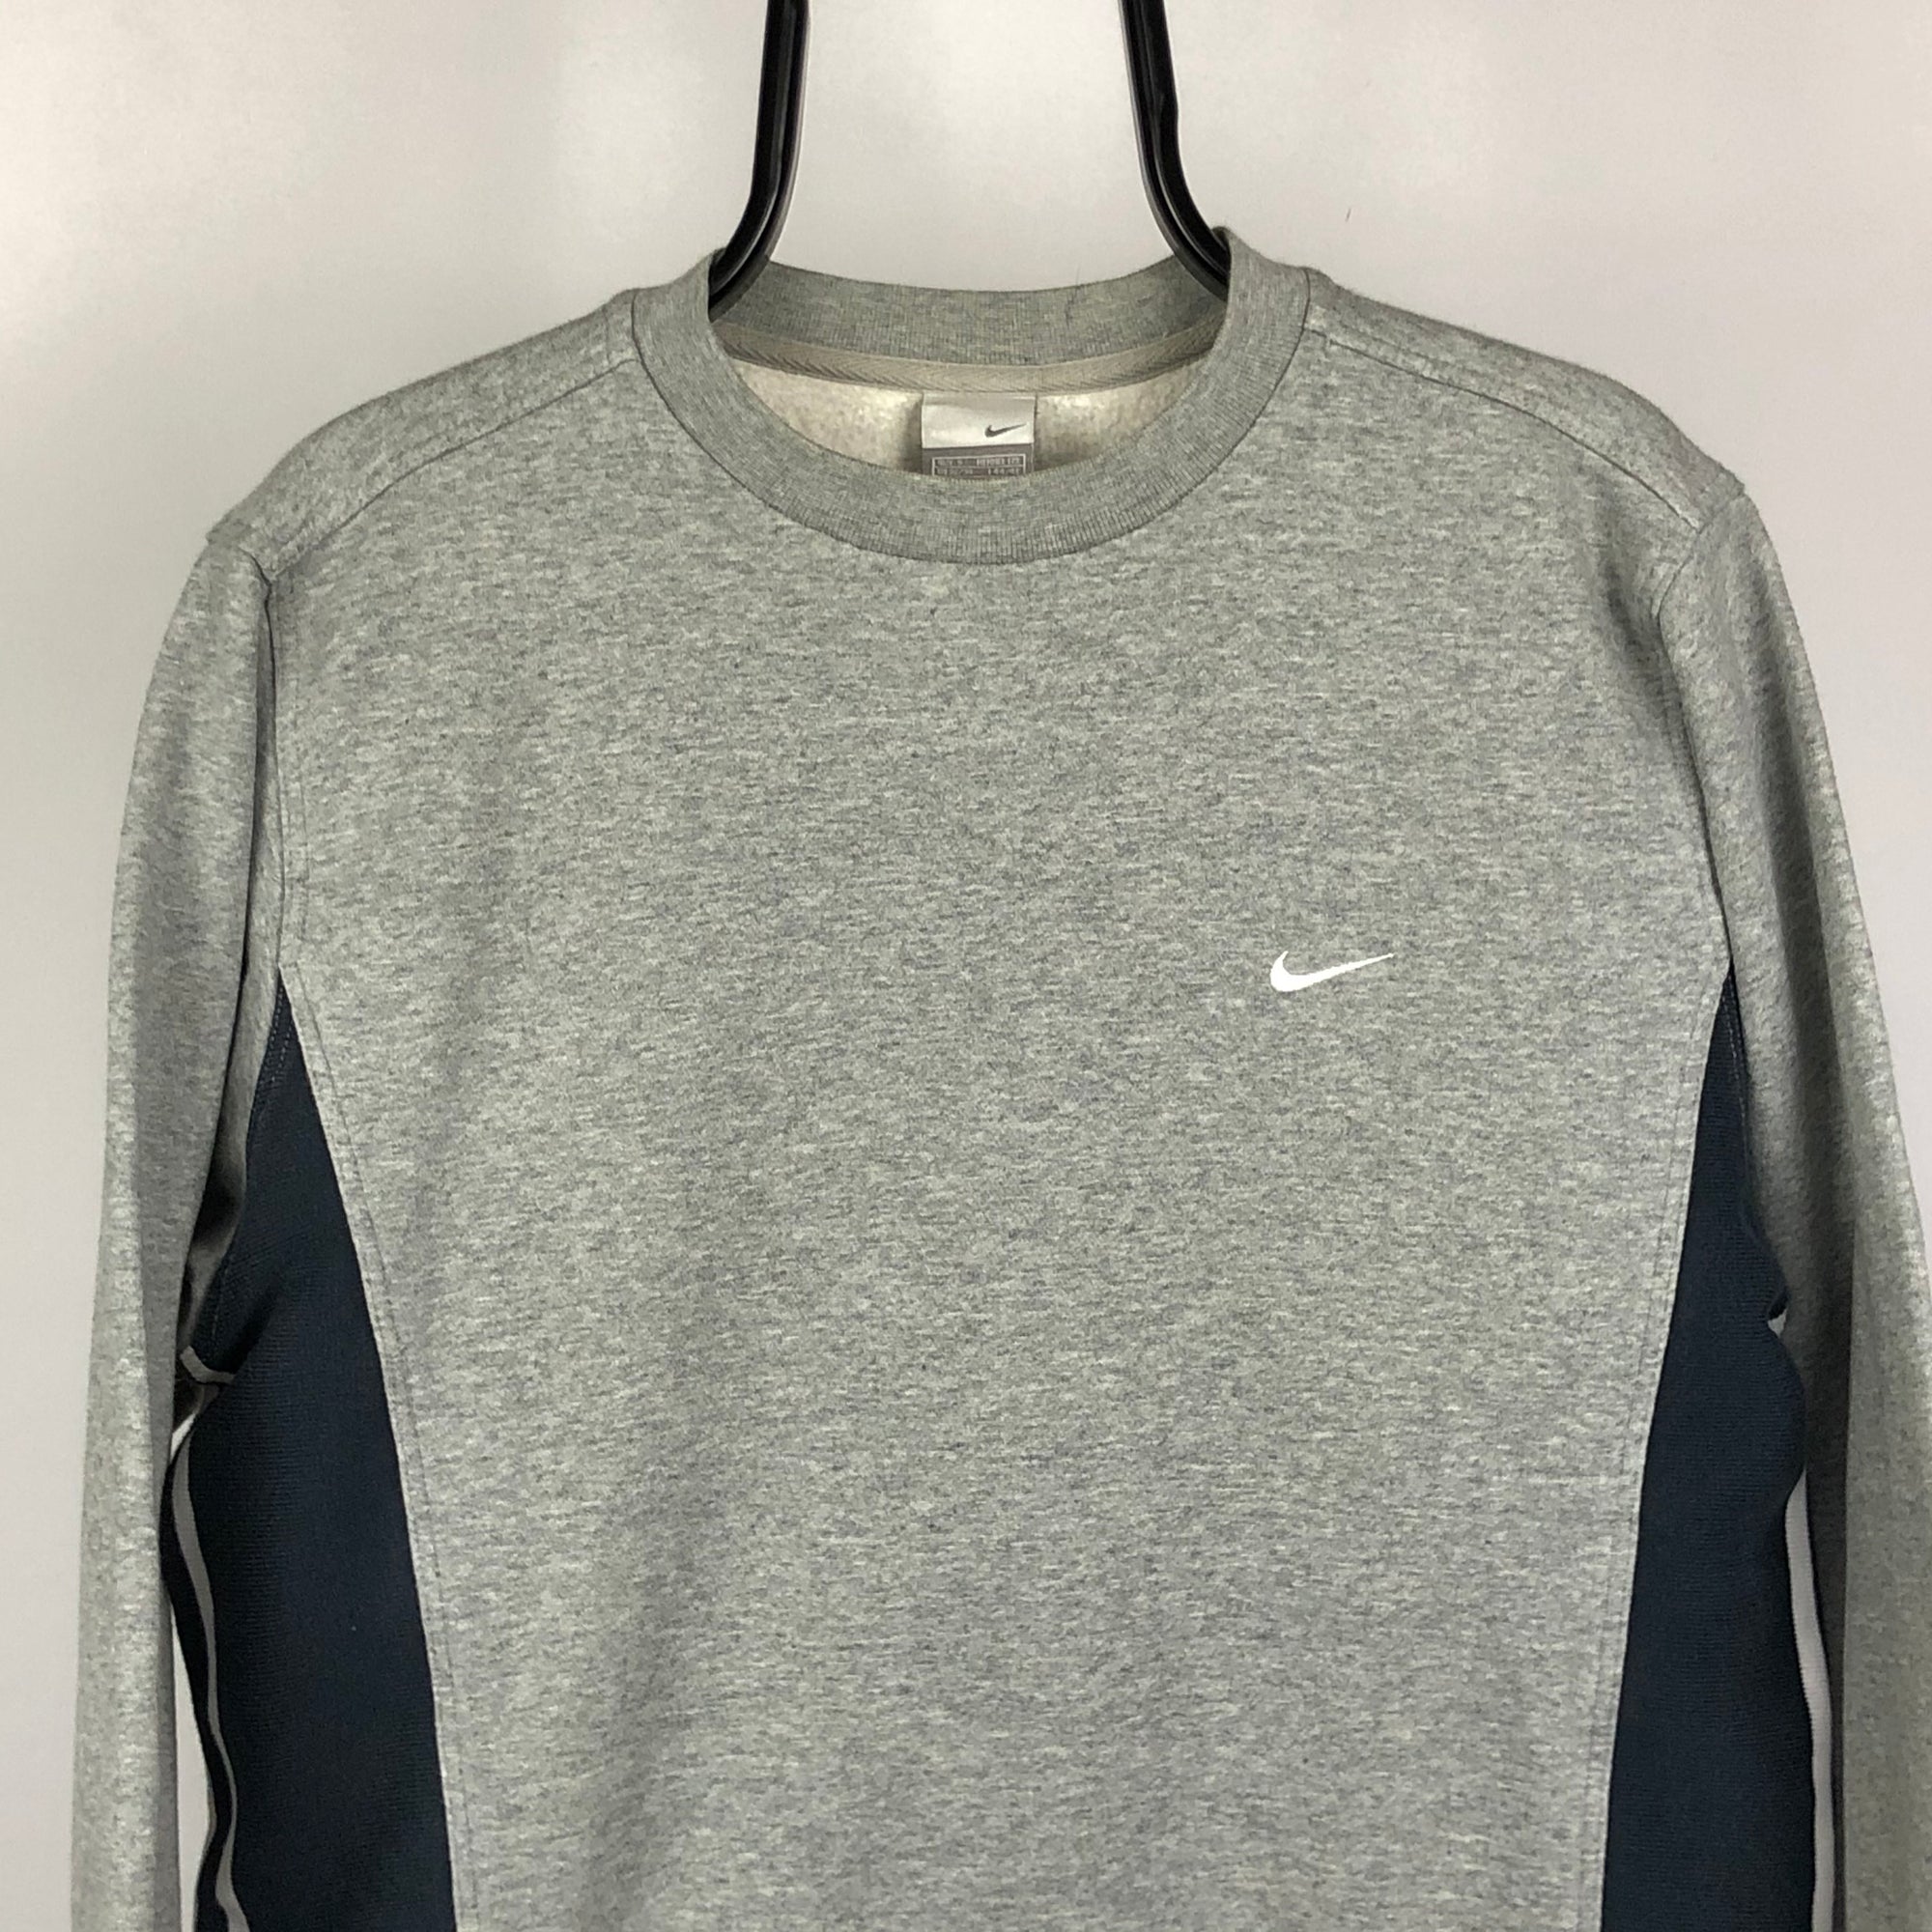 Vintage Nike Embroidered Small Logo Sweatshirt in Grey/Navy - Men's Small/Women's Medium